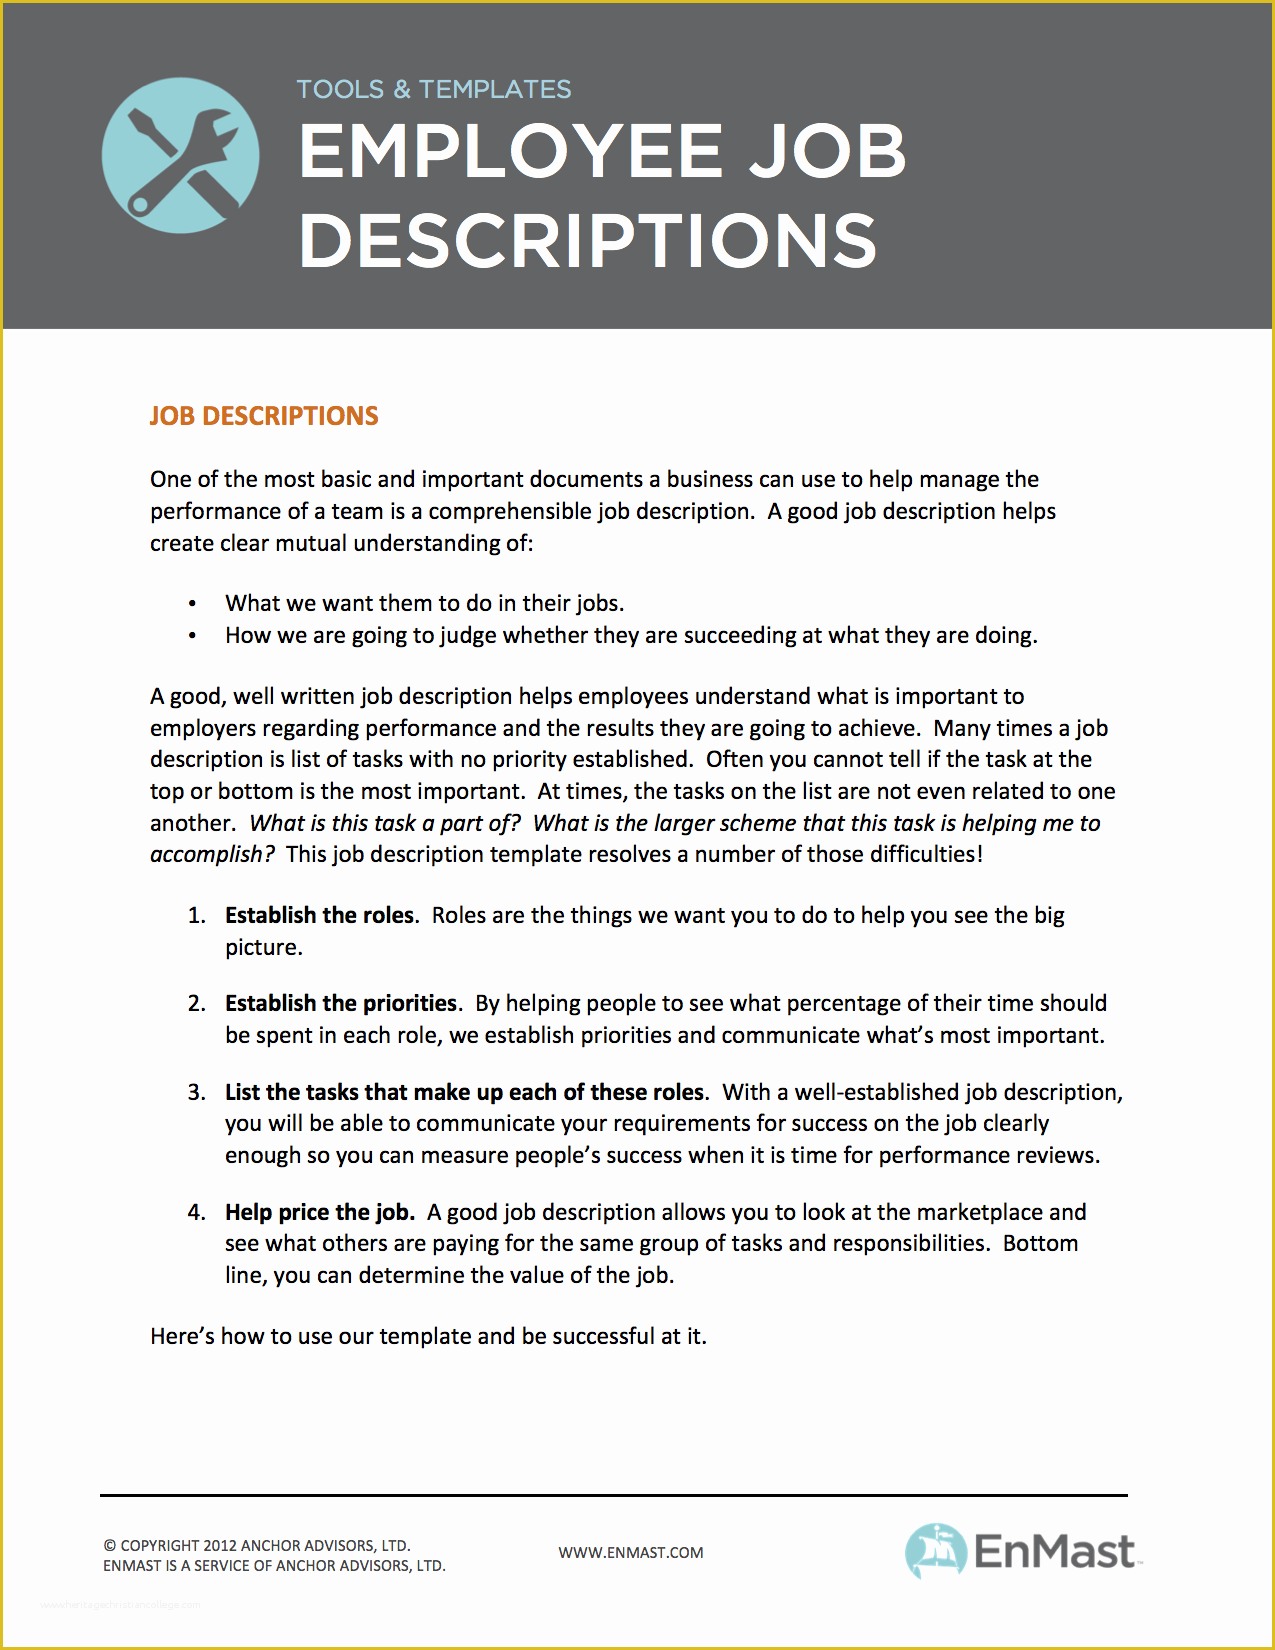 free-printable-job-description-template-of-employee-job-descriptions-tool-and-template